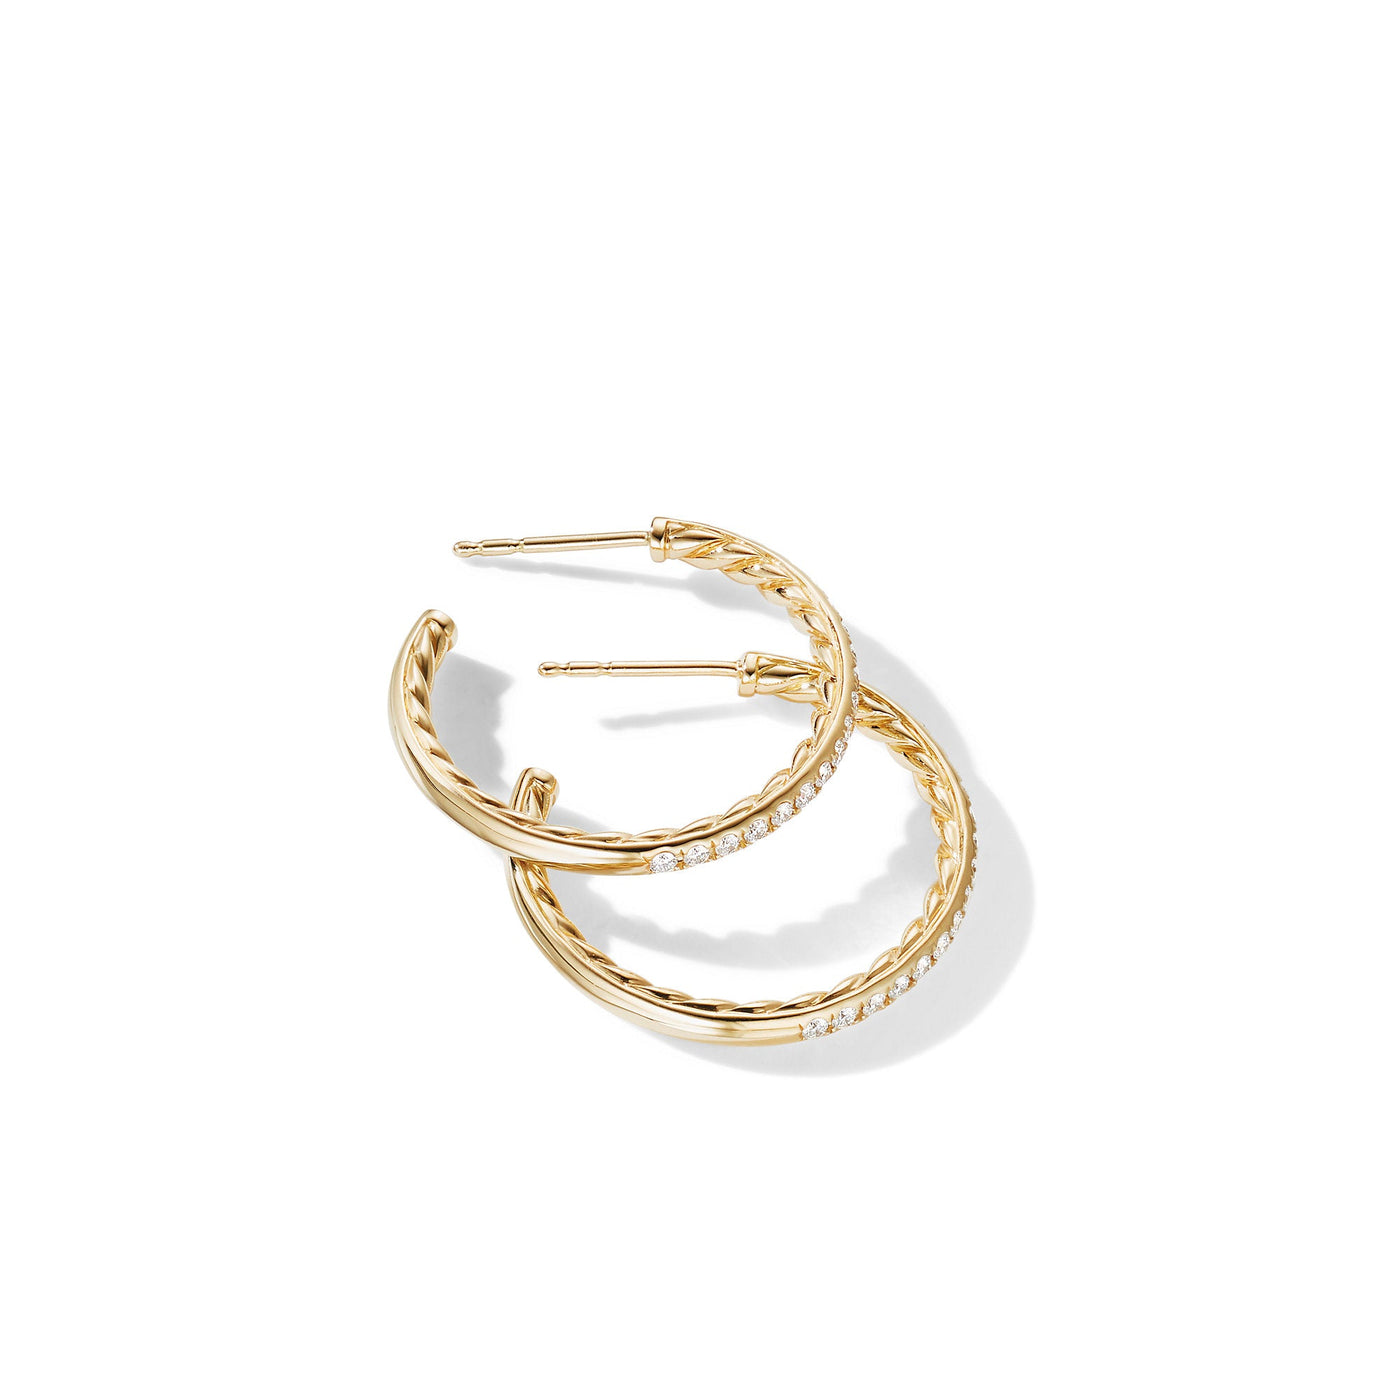 Pavé Hoop Earrings in 18K Yellow Gold with Diamonds\, 25.4mm